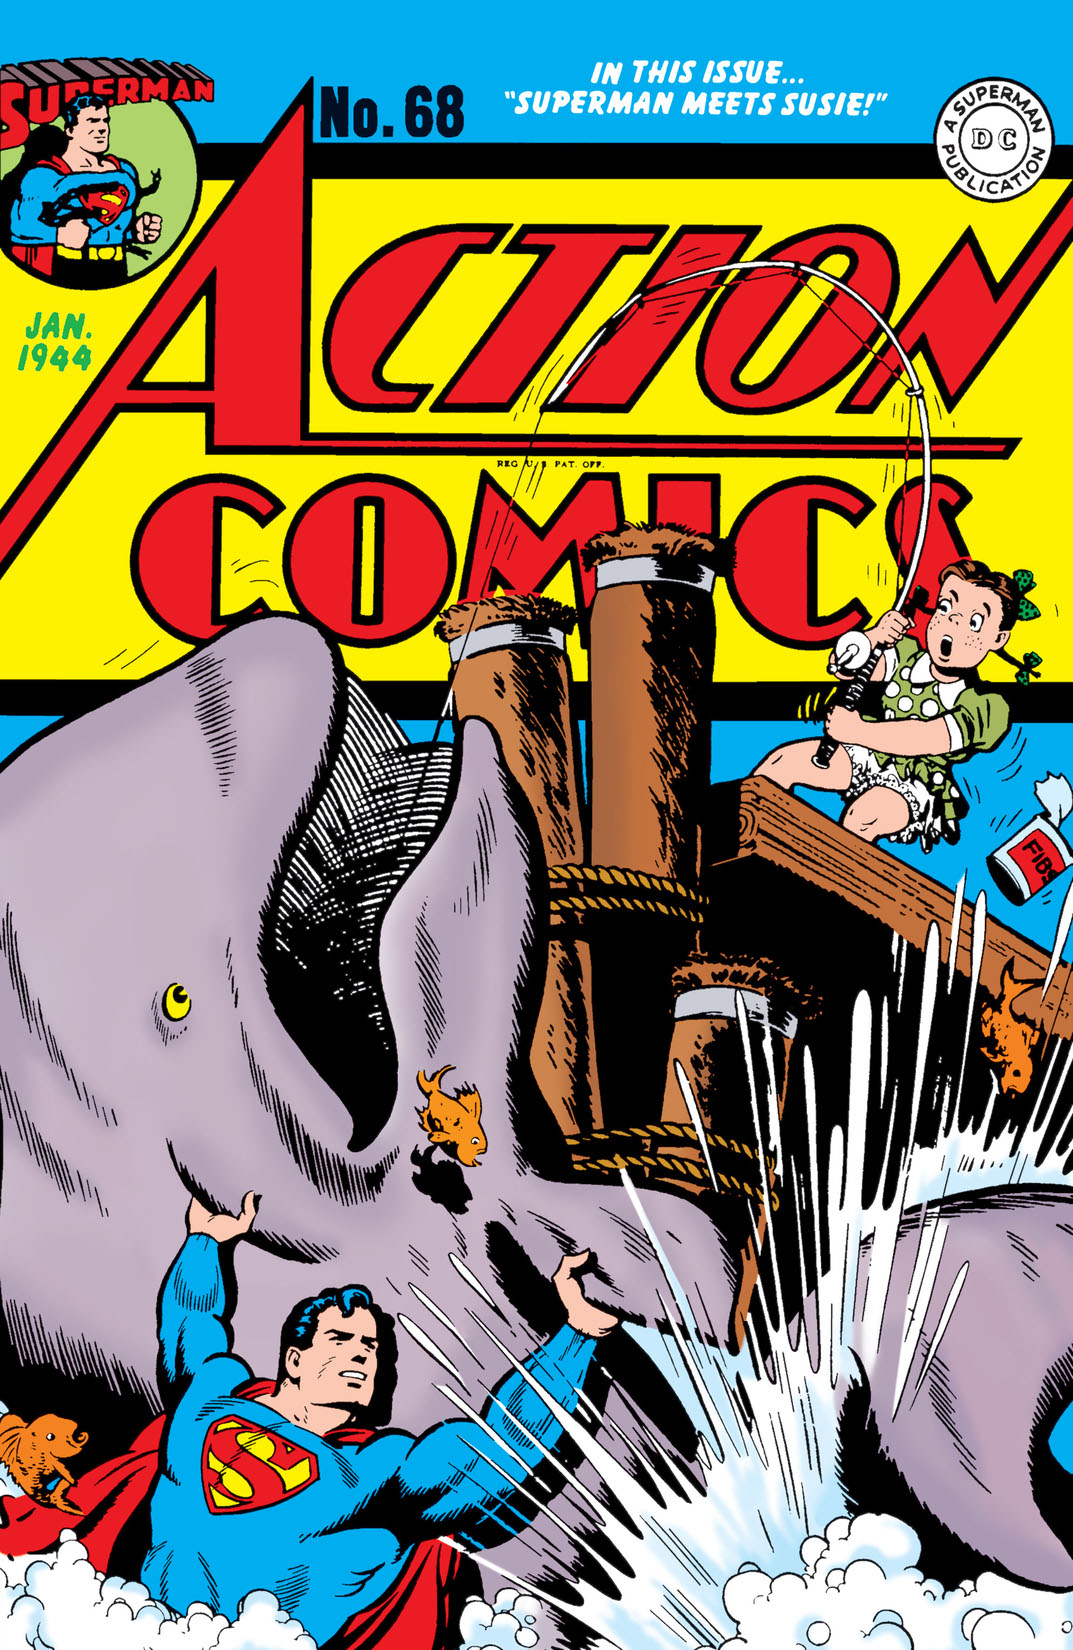 Action Comics (1938-) #68 preview images